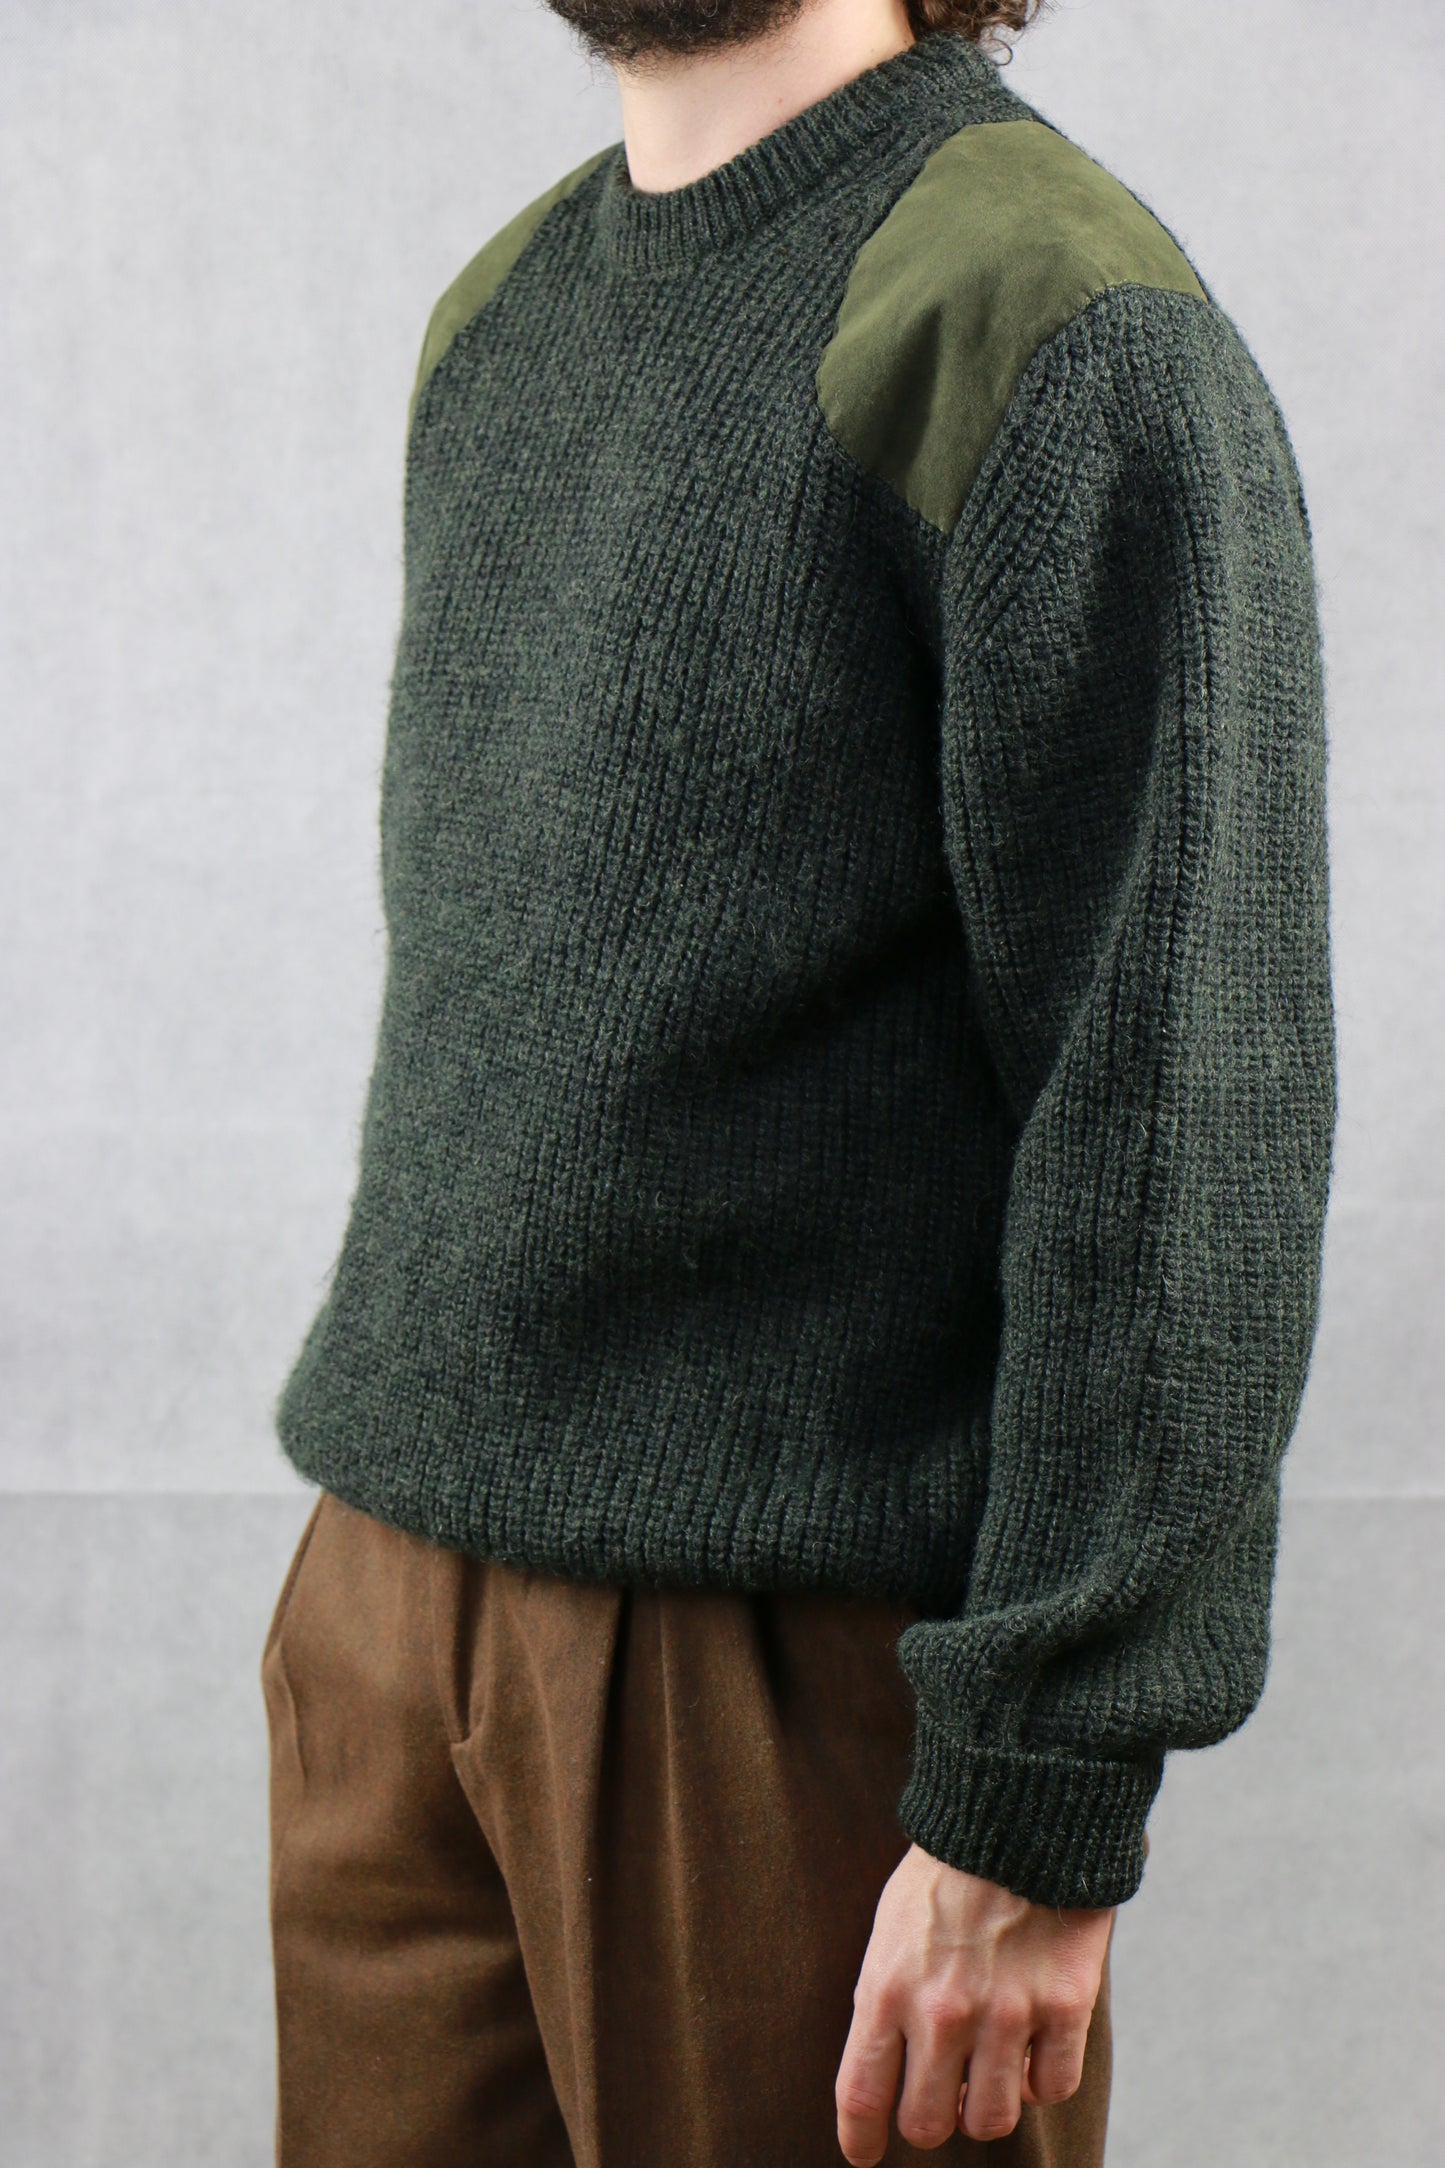 Barbour Hunting Sweater, clochard92.com